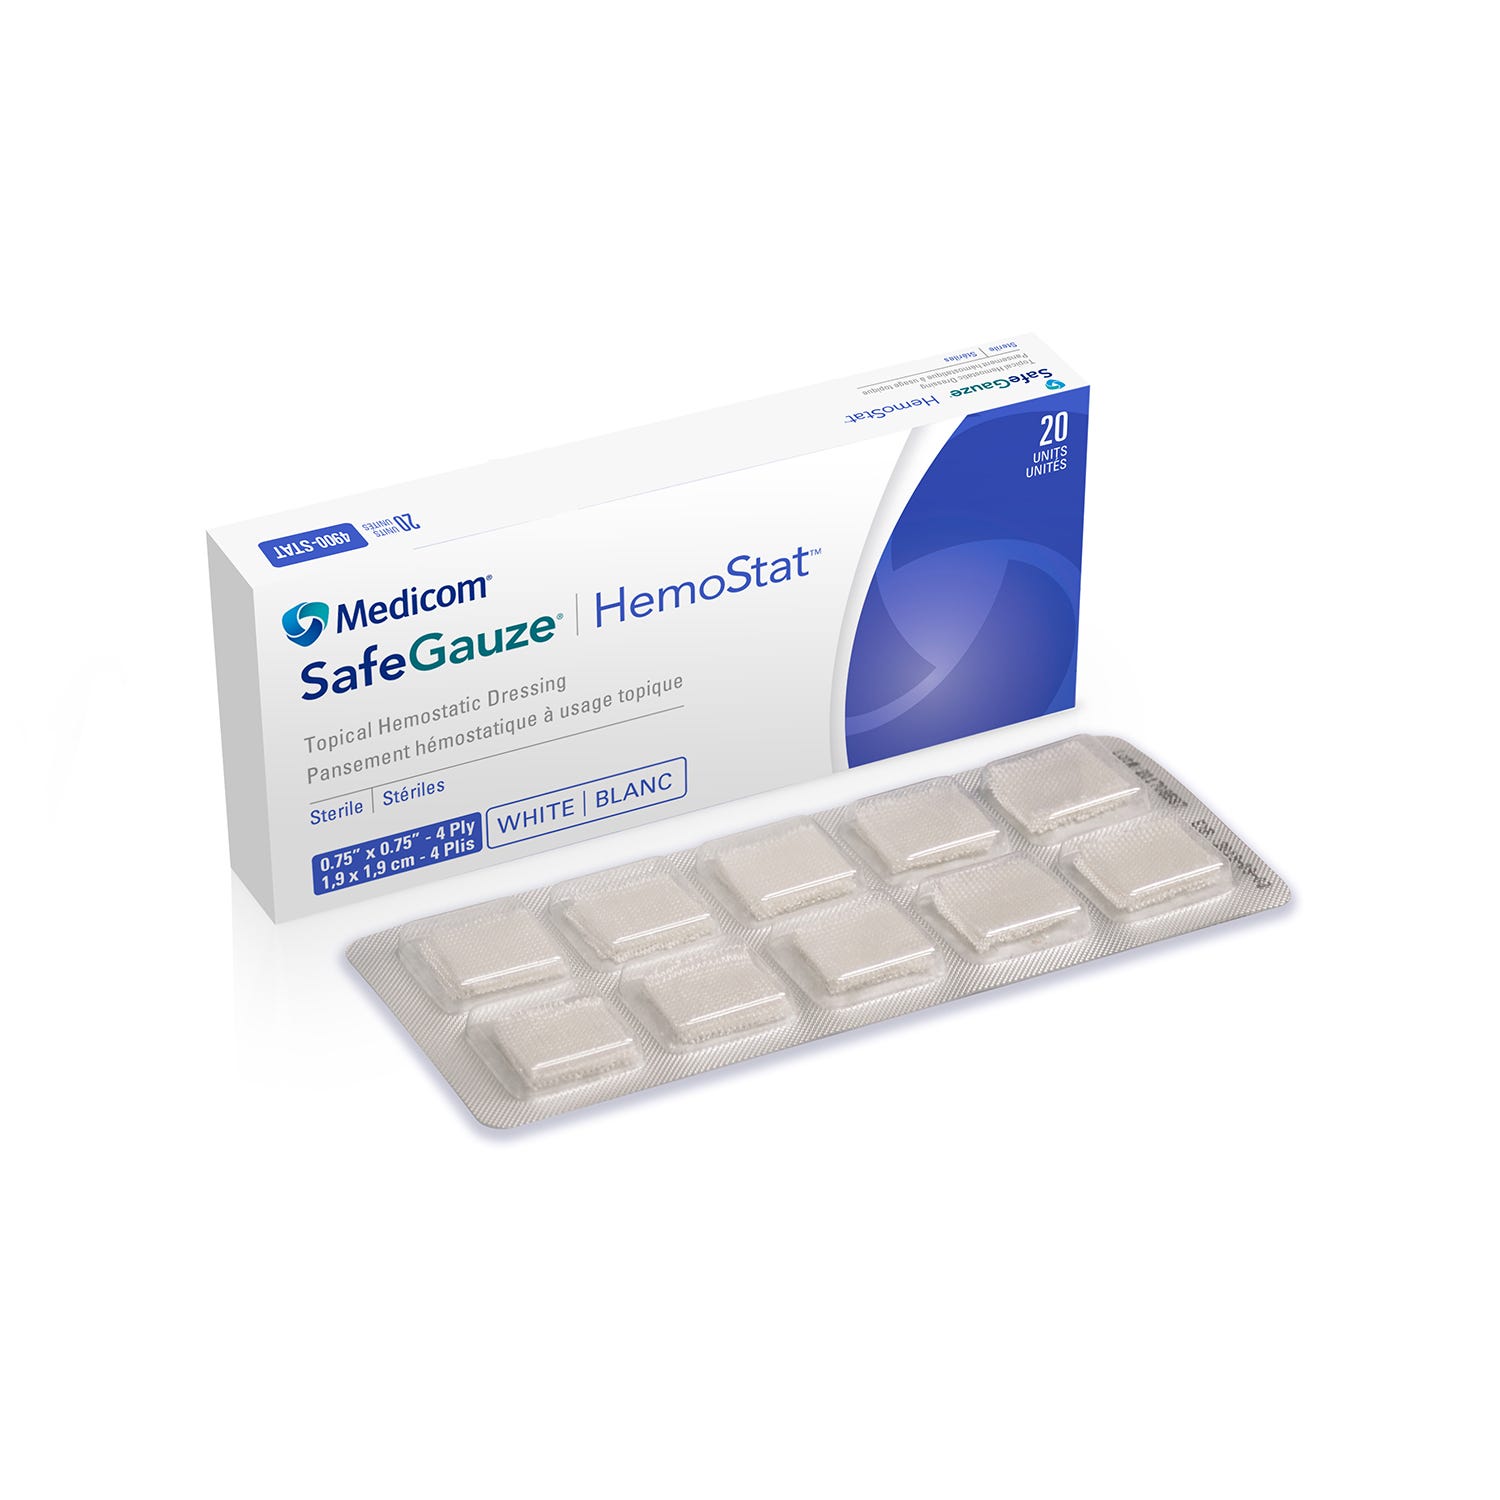 SafeGauze® HemoStat™ Topical Hemostatic Dressing, 0.75" x 0.75", 4ply, Sterile - 20/Box